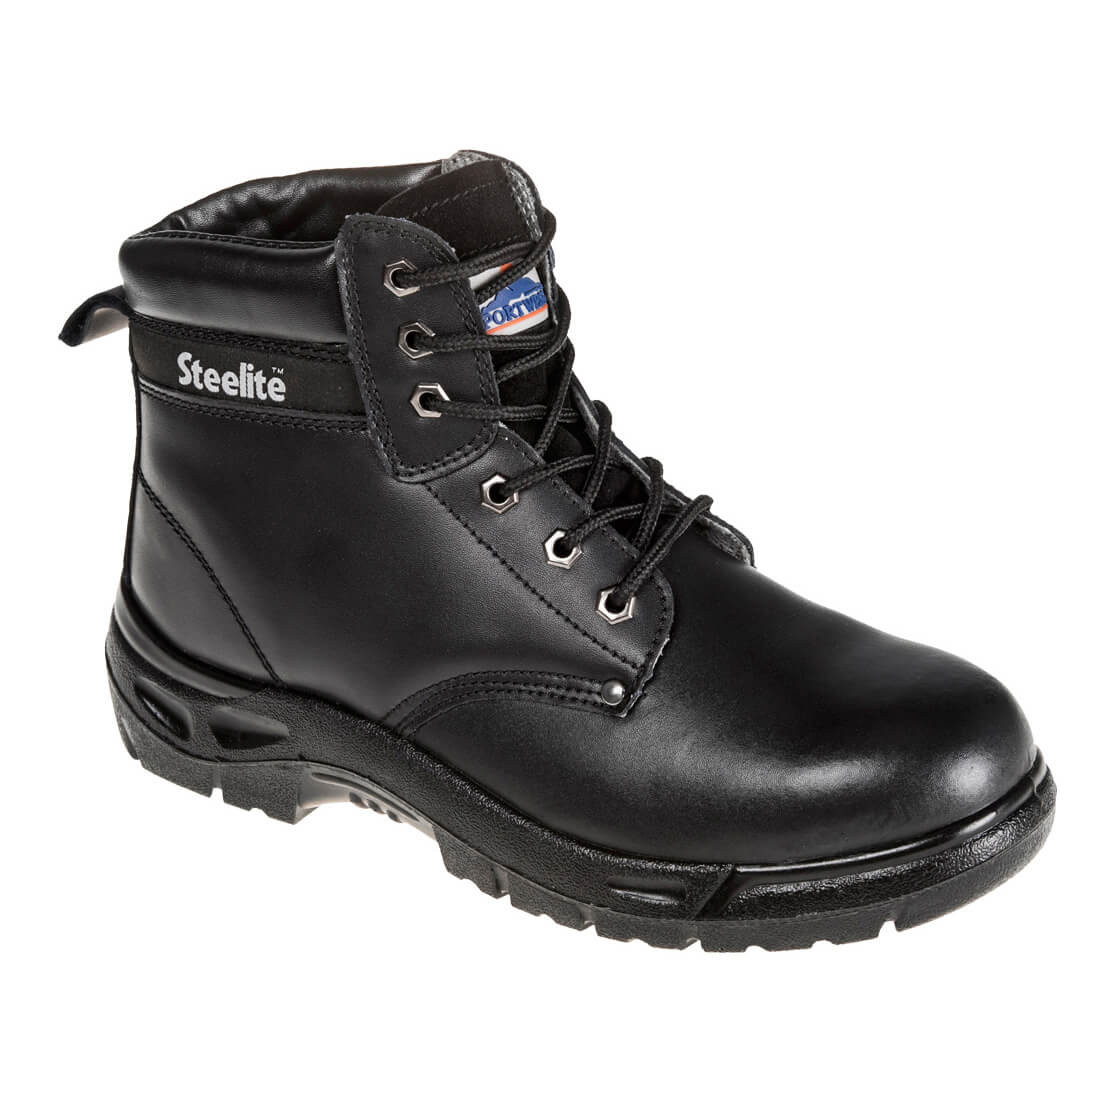 Brodequin Steelite™ S3 - Les chaussures de protection